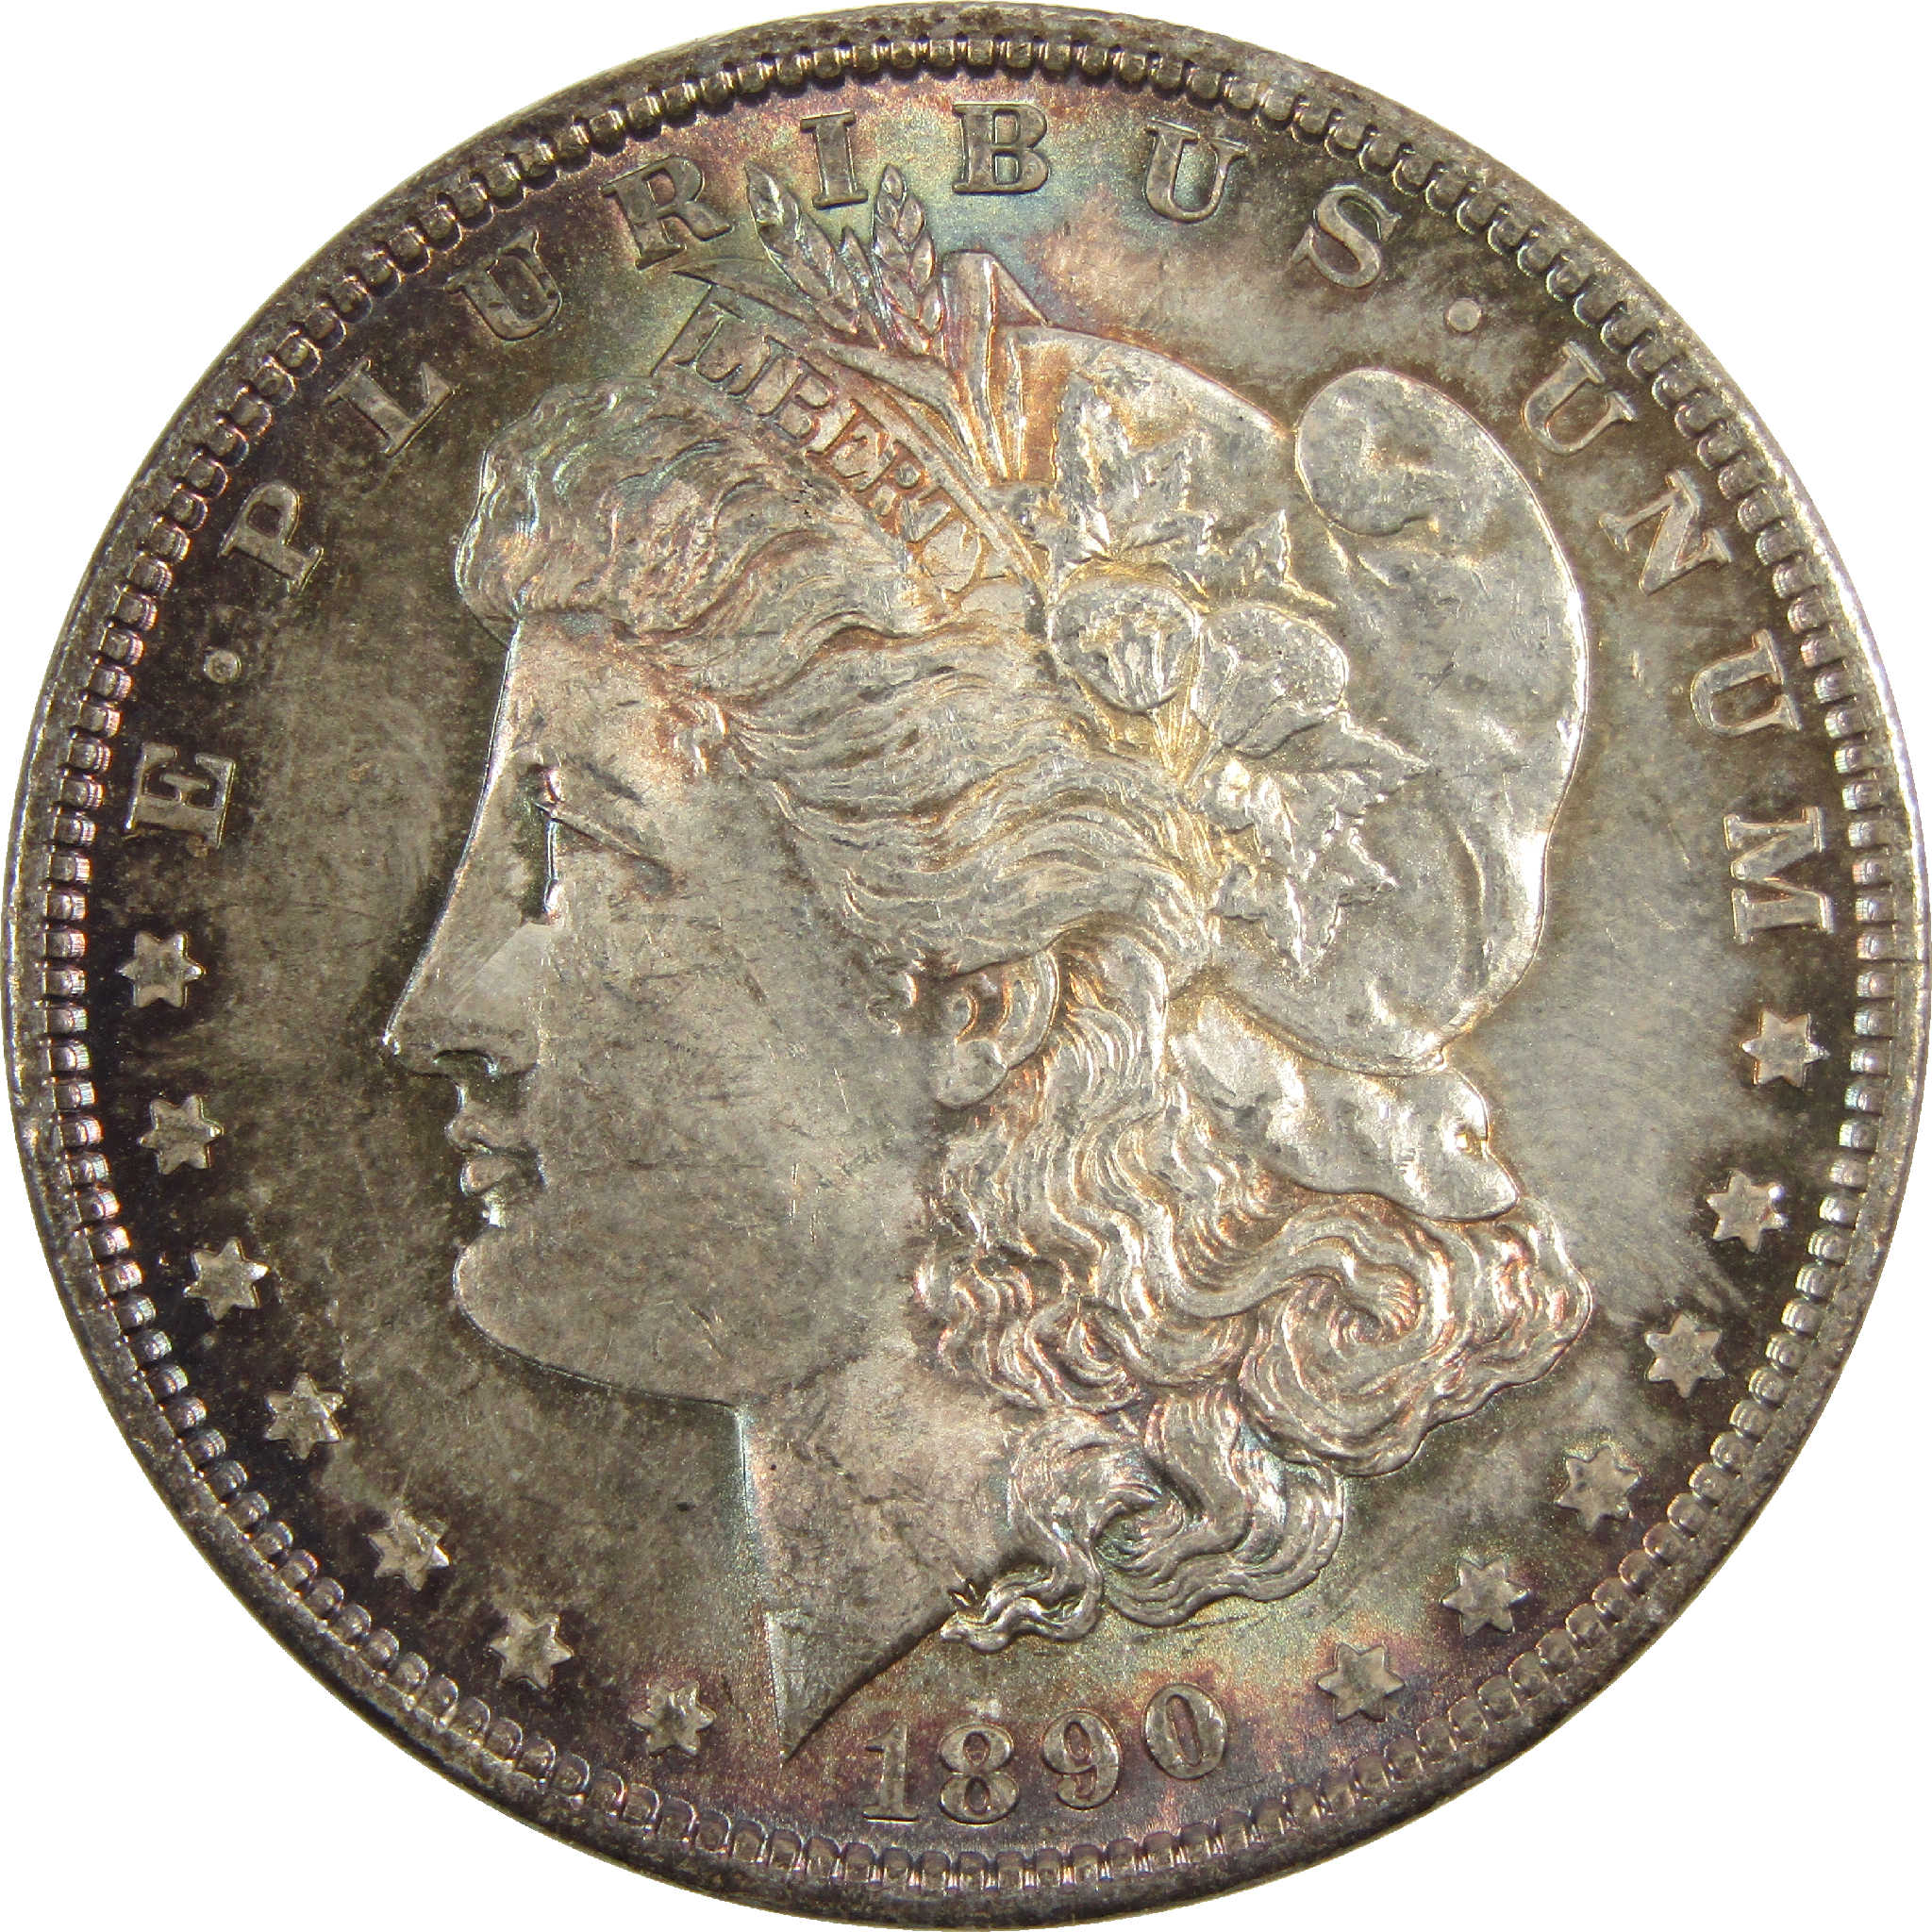 1890 Morgan Dollar Uncirculated Silver $1 Coin SKU:CPC6168 - Morgan coin - Morgan silver dollar - Morgan silver dollar for sale - Profile Coins &amp; Collectibles